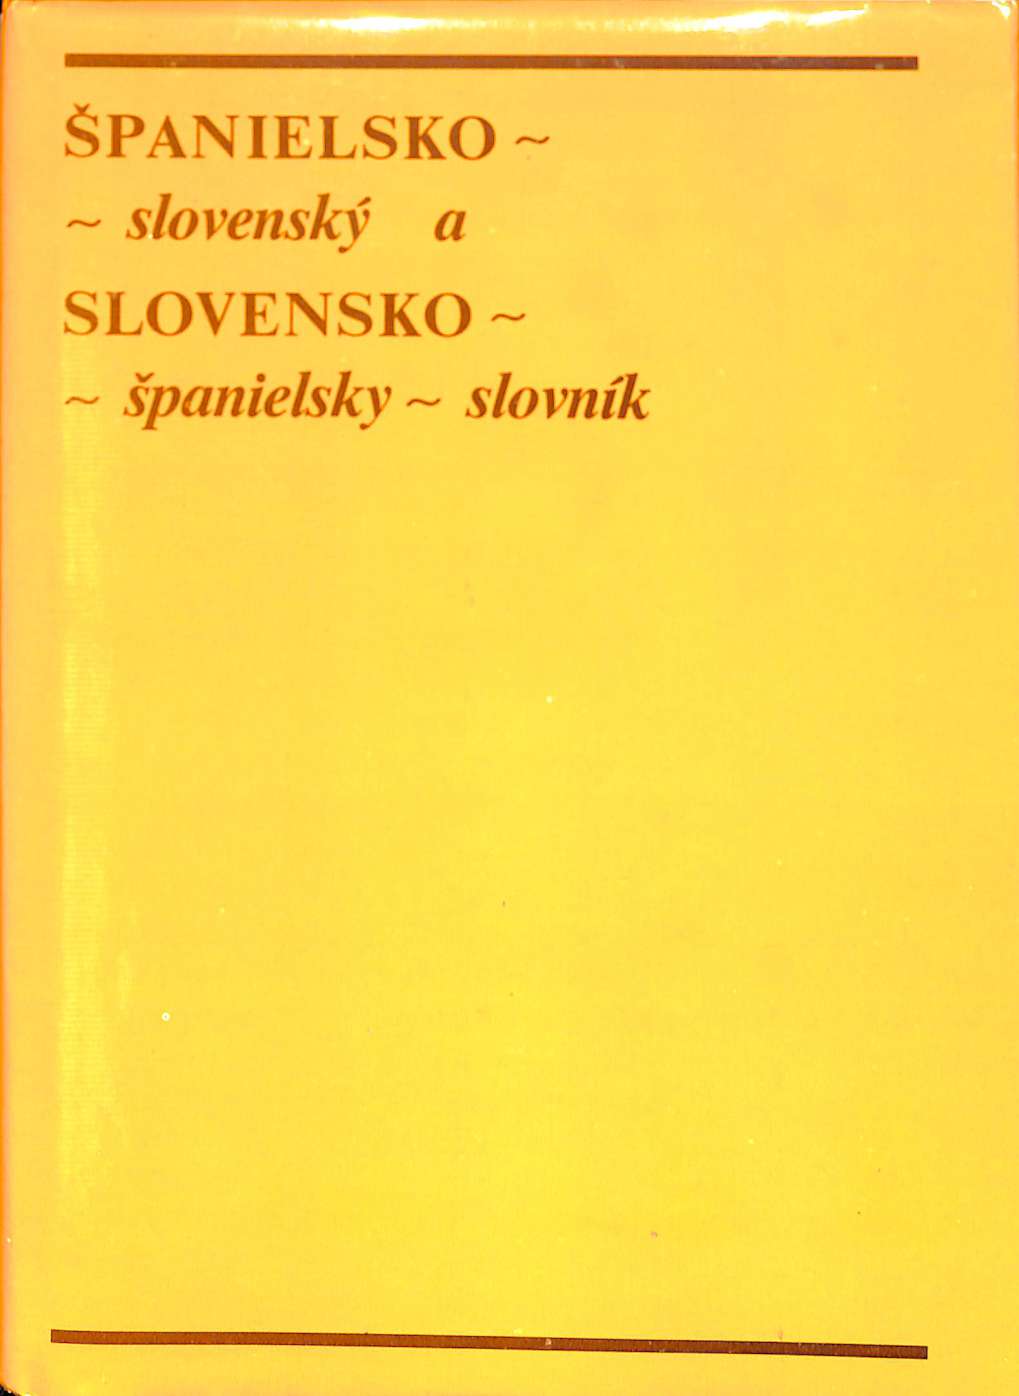 panielsko Slovensk a Slovensko panielsky slovnk